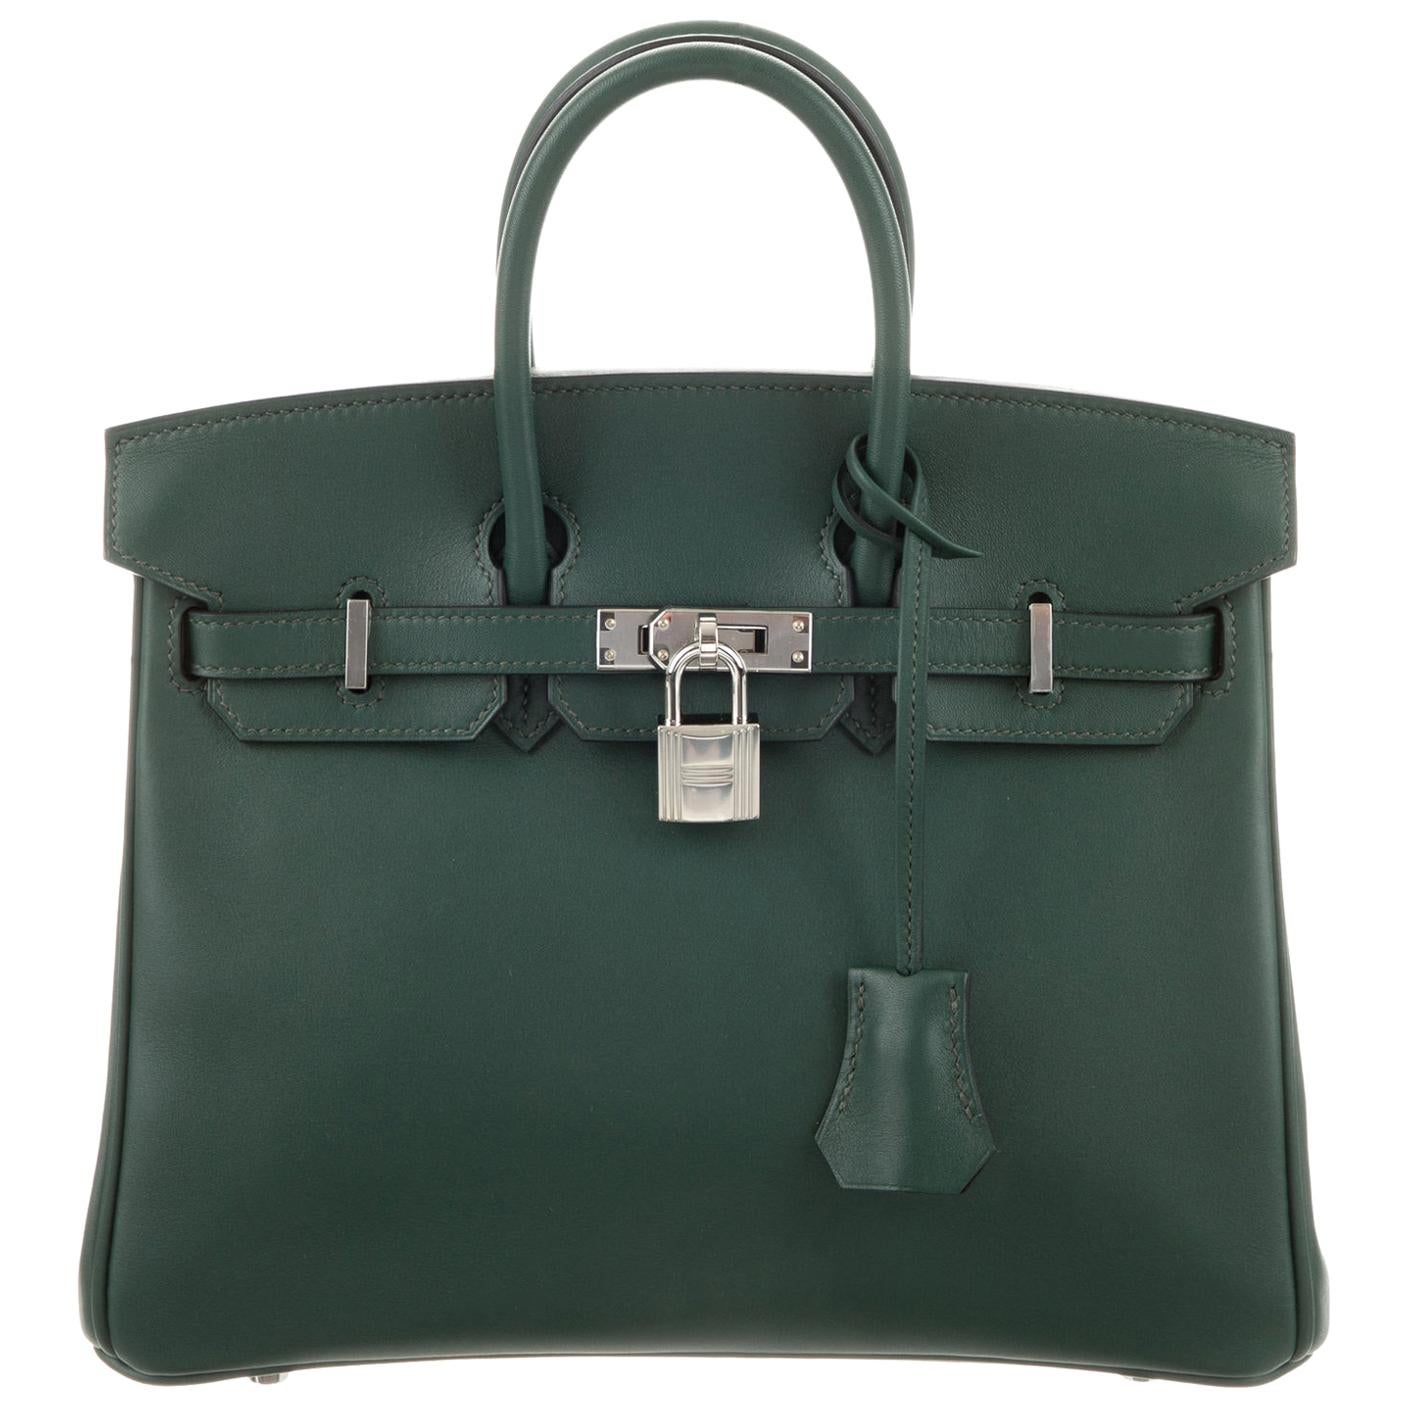 Hermes NEW Birkin 25 Green Leather Top Handle Tote Satchel Shoulder Bag in Box